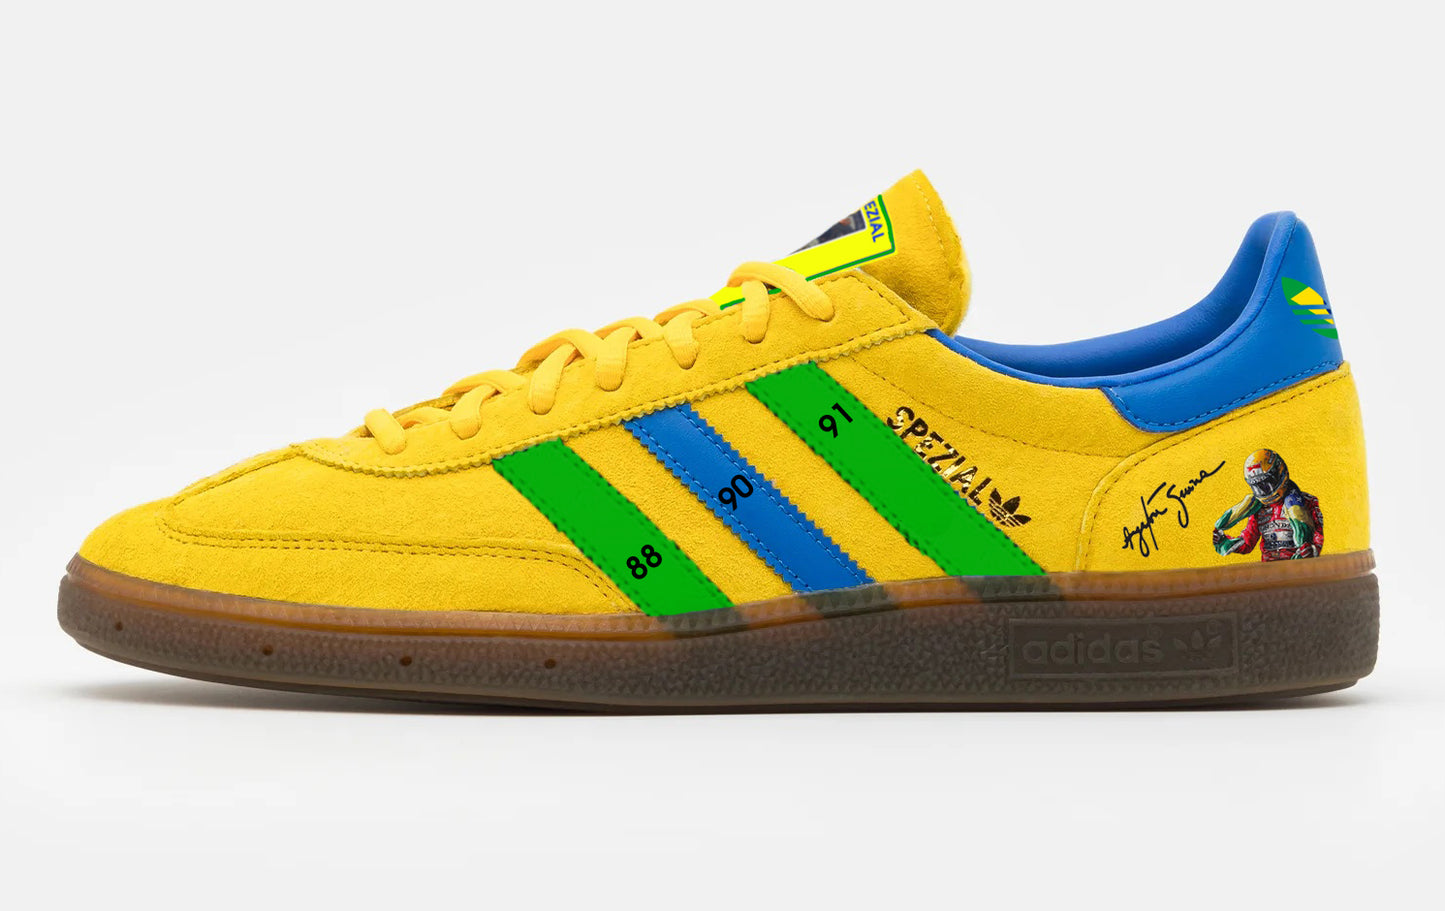 Limited edition F1 Ayrton Senna Yellow  / Green / Blue Adidas custom Handball Spezial trainers / sneakers